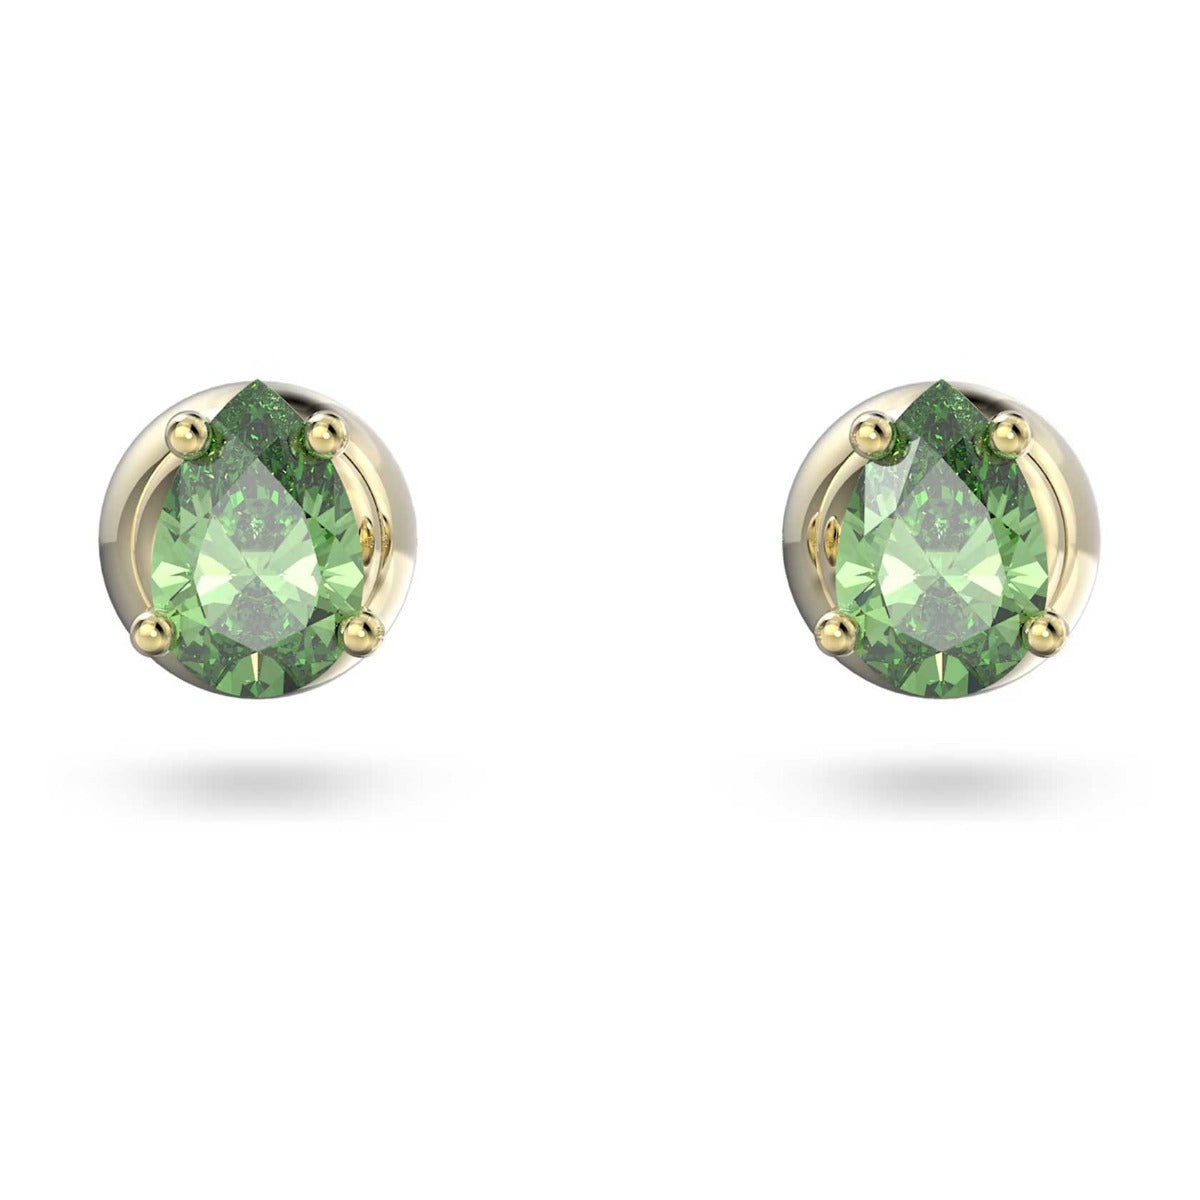 Swarovski Stilla Stud Earrings, Pear Cut, Green, Gold-Tone Plated